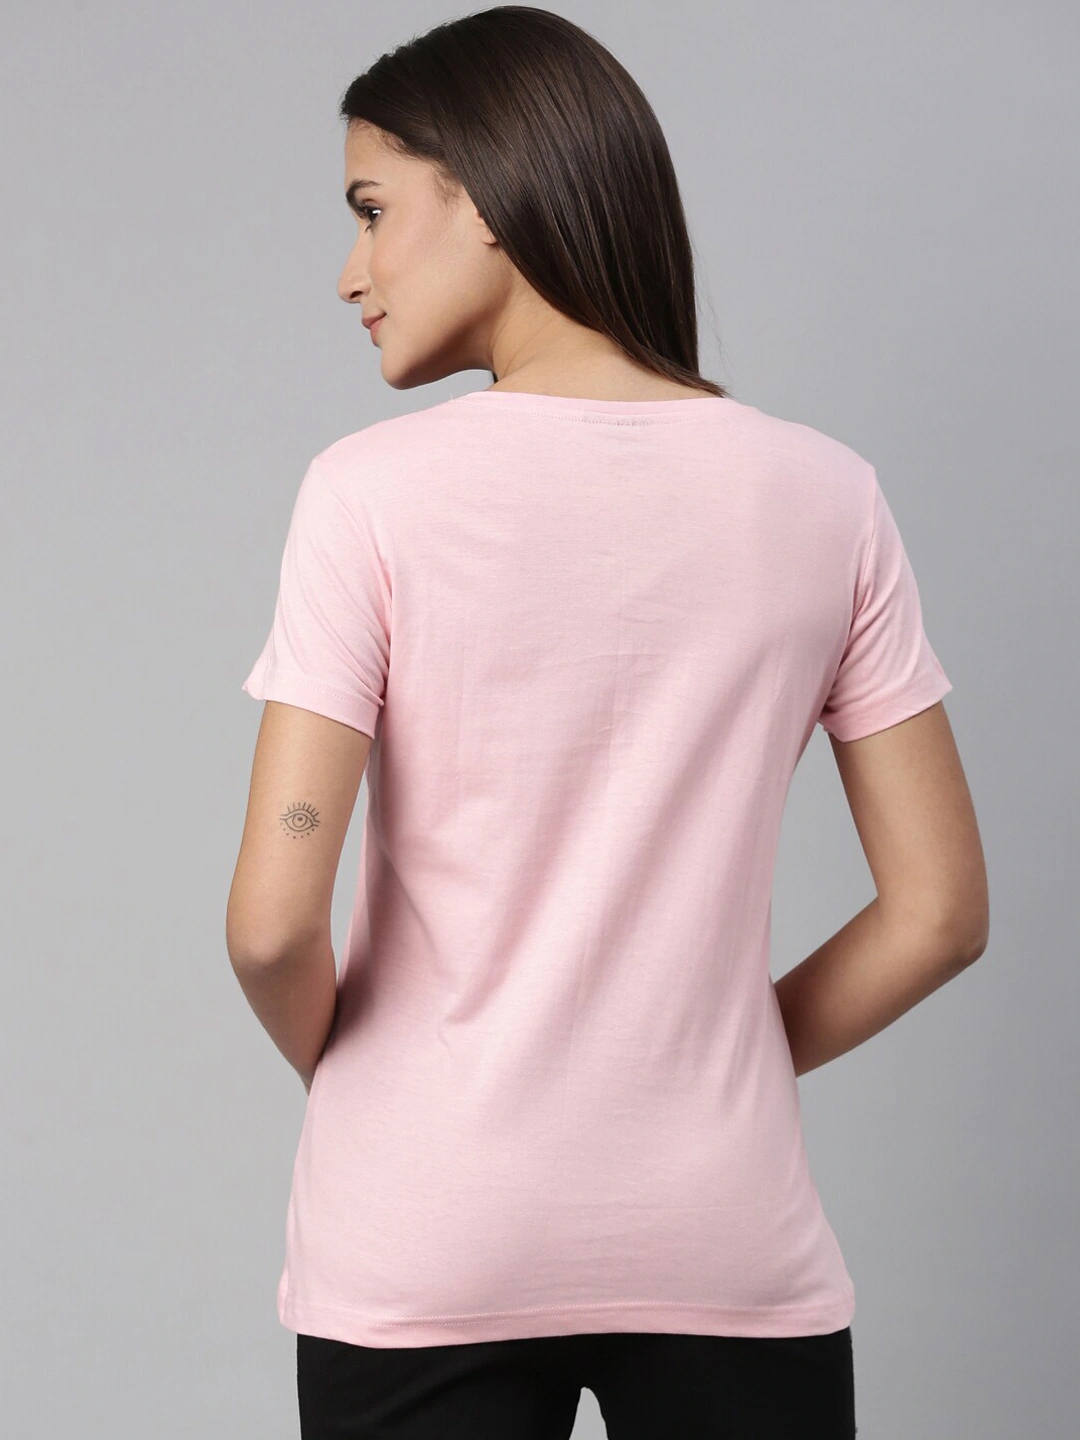 Kryptic | Women's Pink Cotton Printed T-Shirts 2